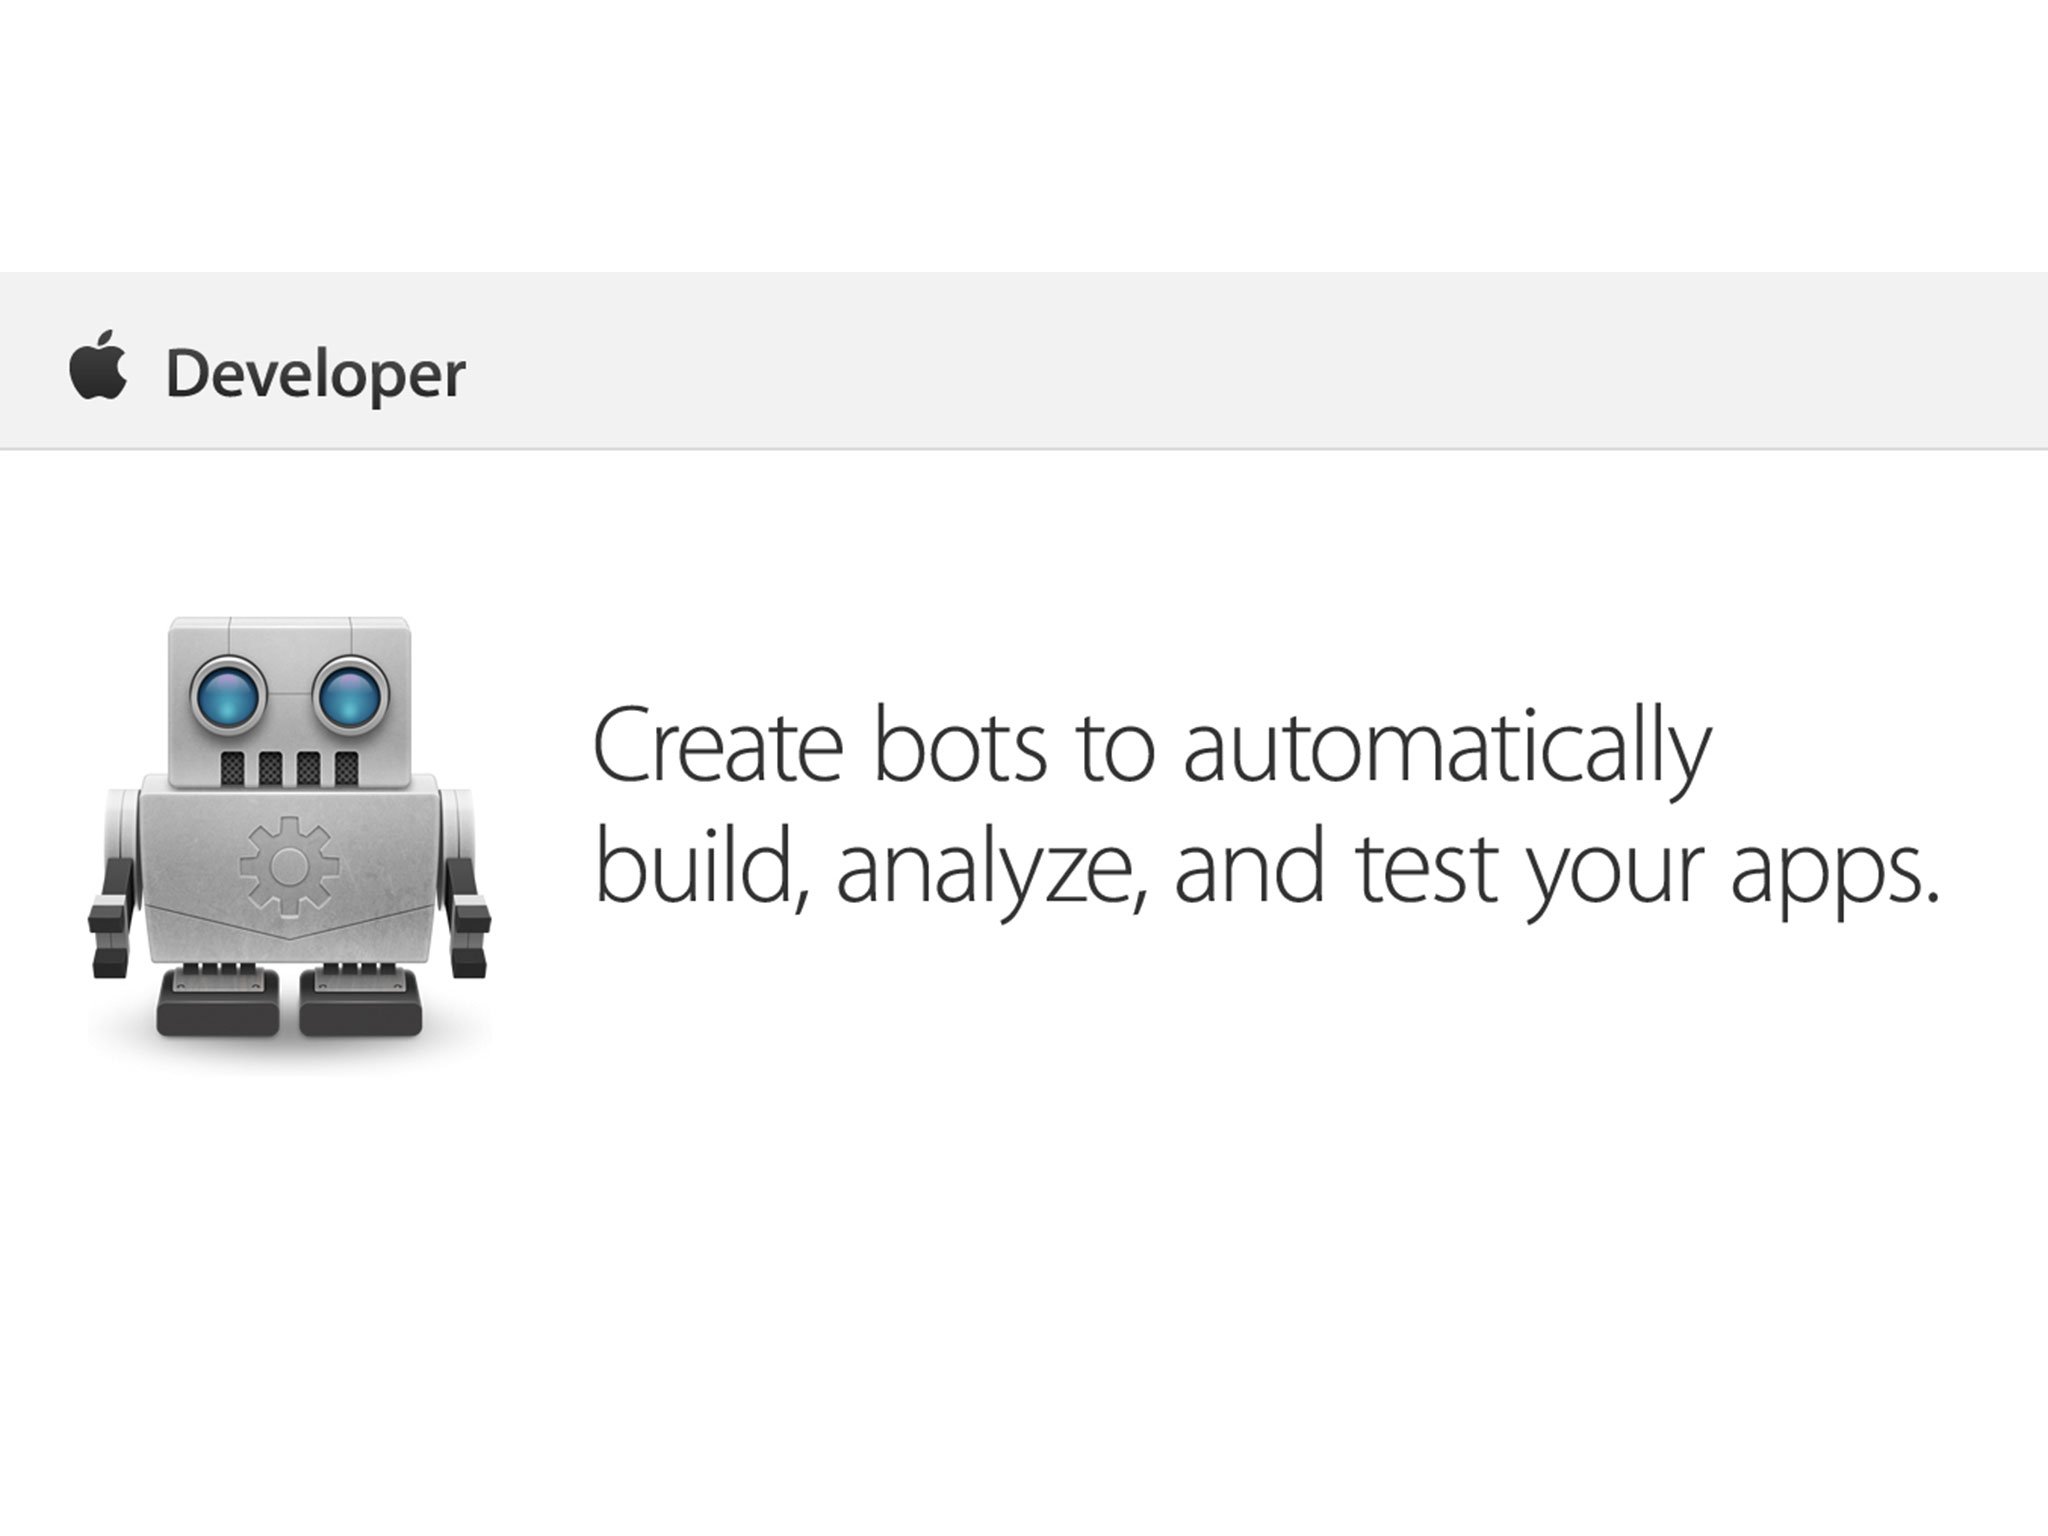 OS X Mavericks Server can create bots to help developers make better apps faster